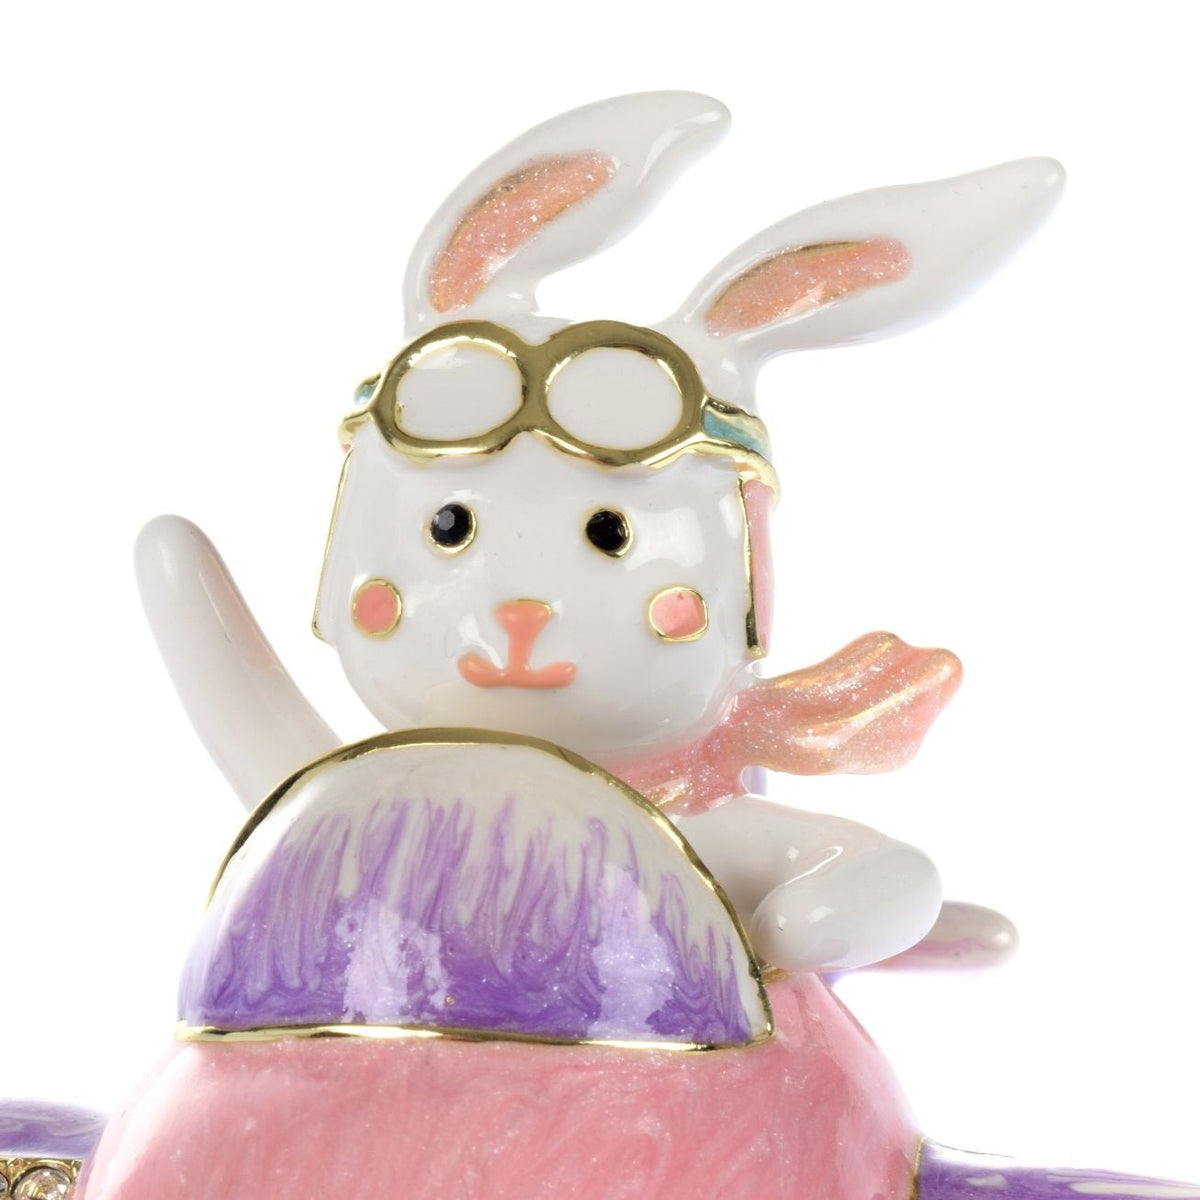 Bunny flying a pink plane trinket box